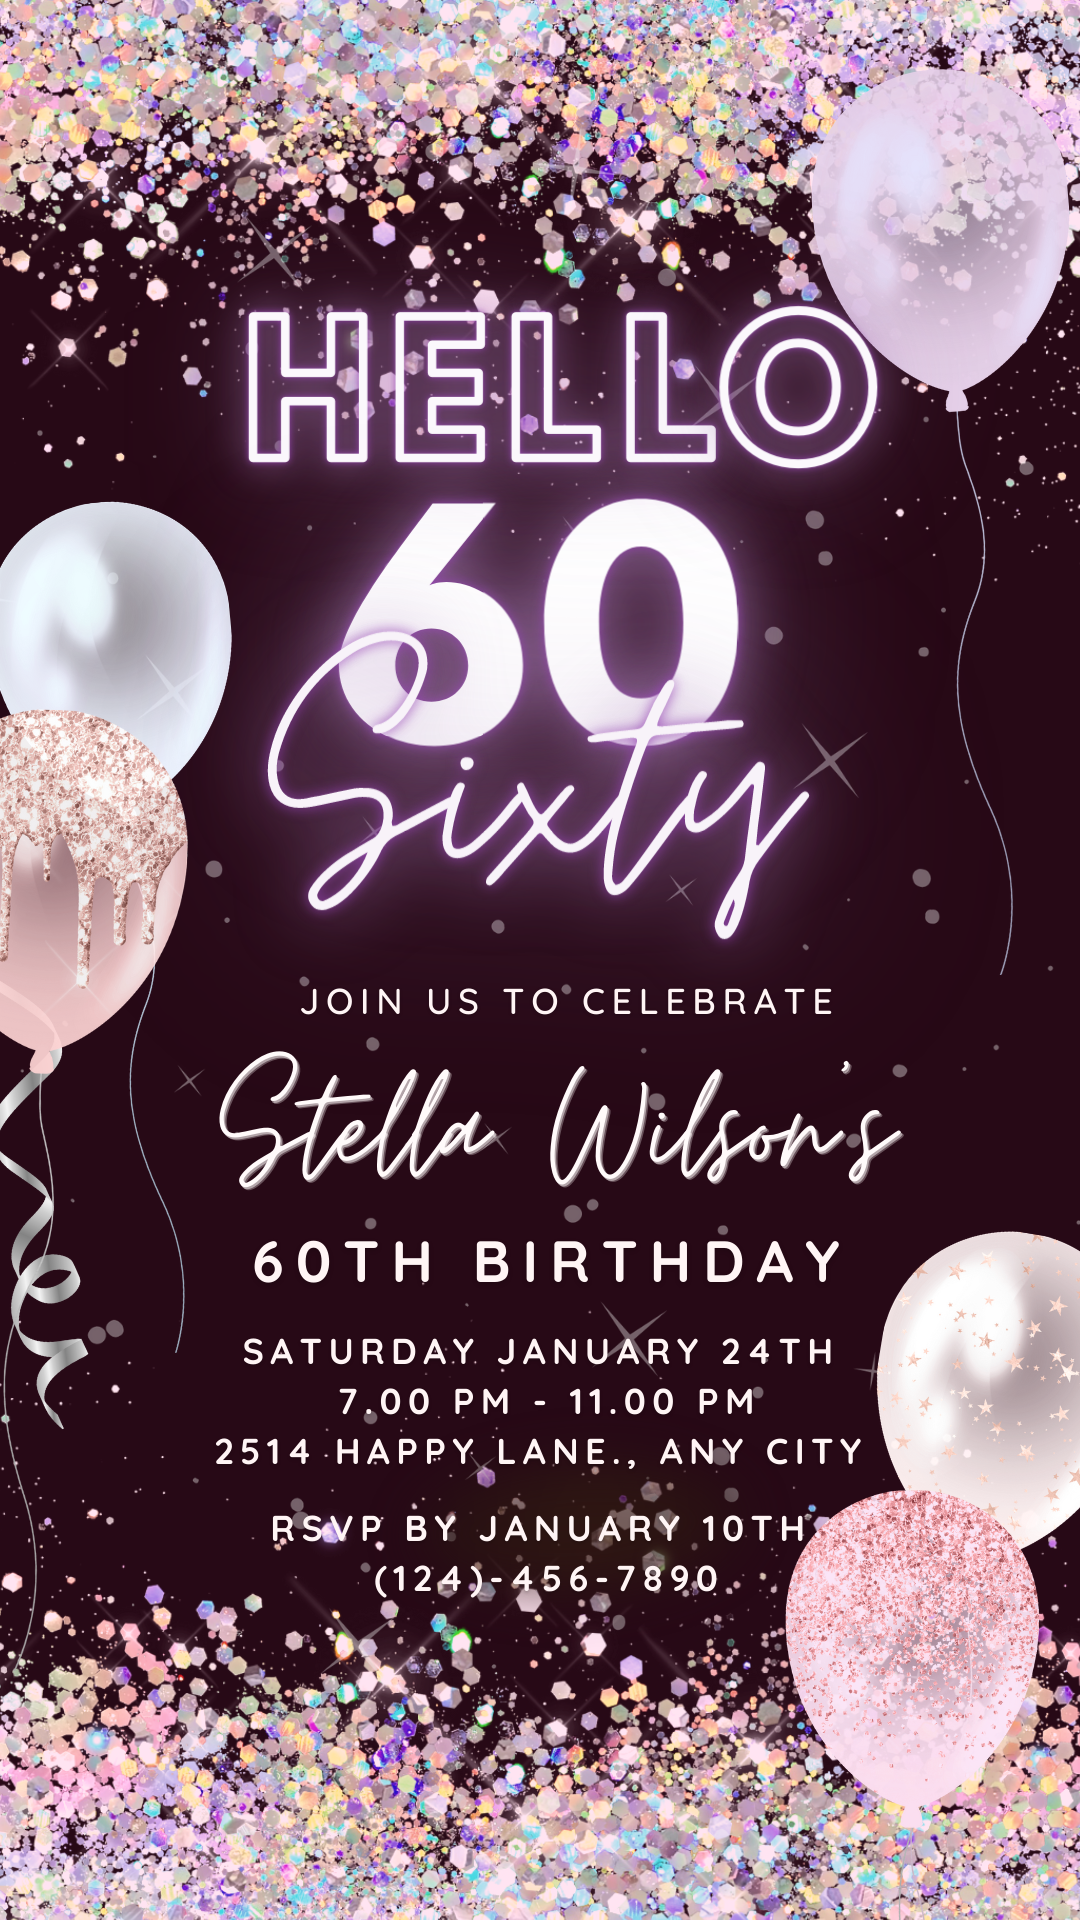 Hello 60 Sixty, Birthday Party Invitation Template, Animated Electronic Party Invite, Editable Sparkle Purple Video Neon Digital e-vite